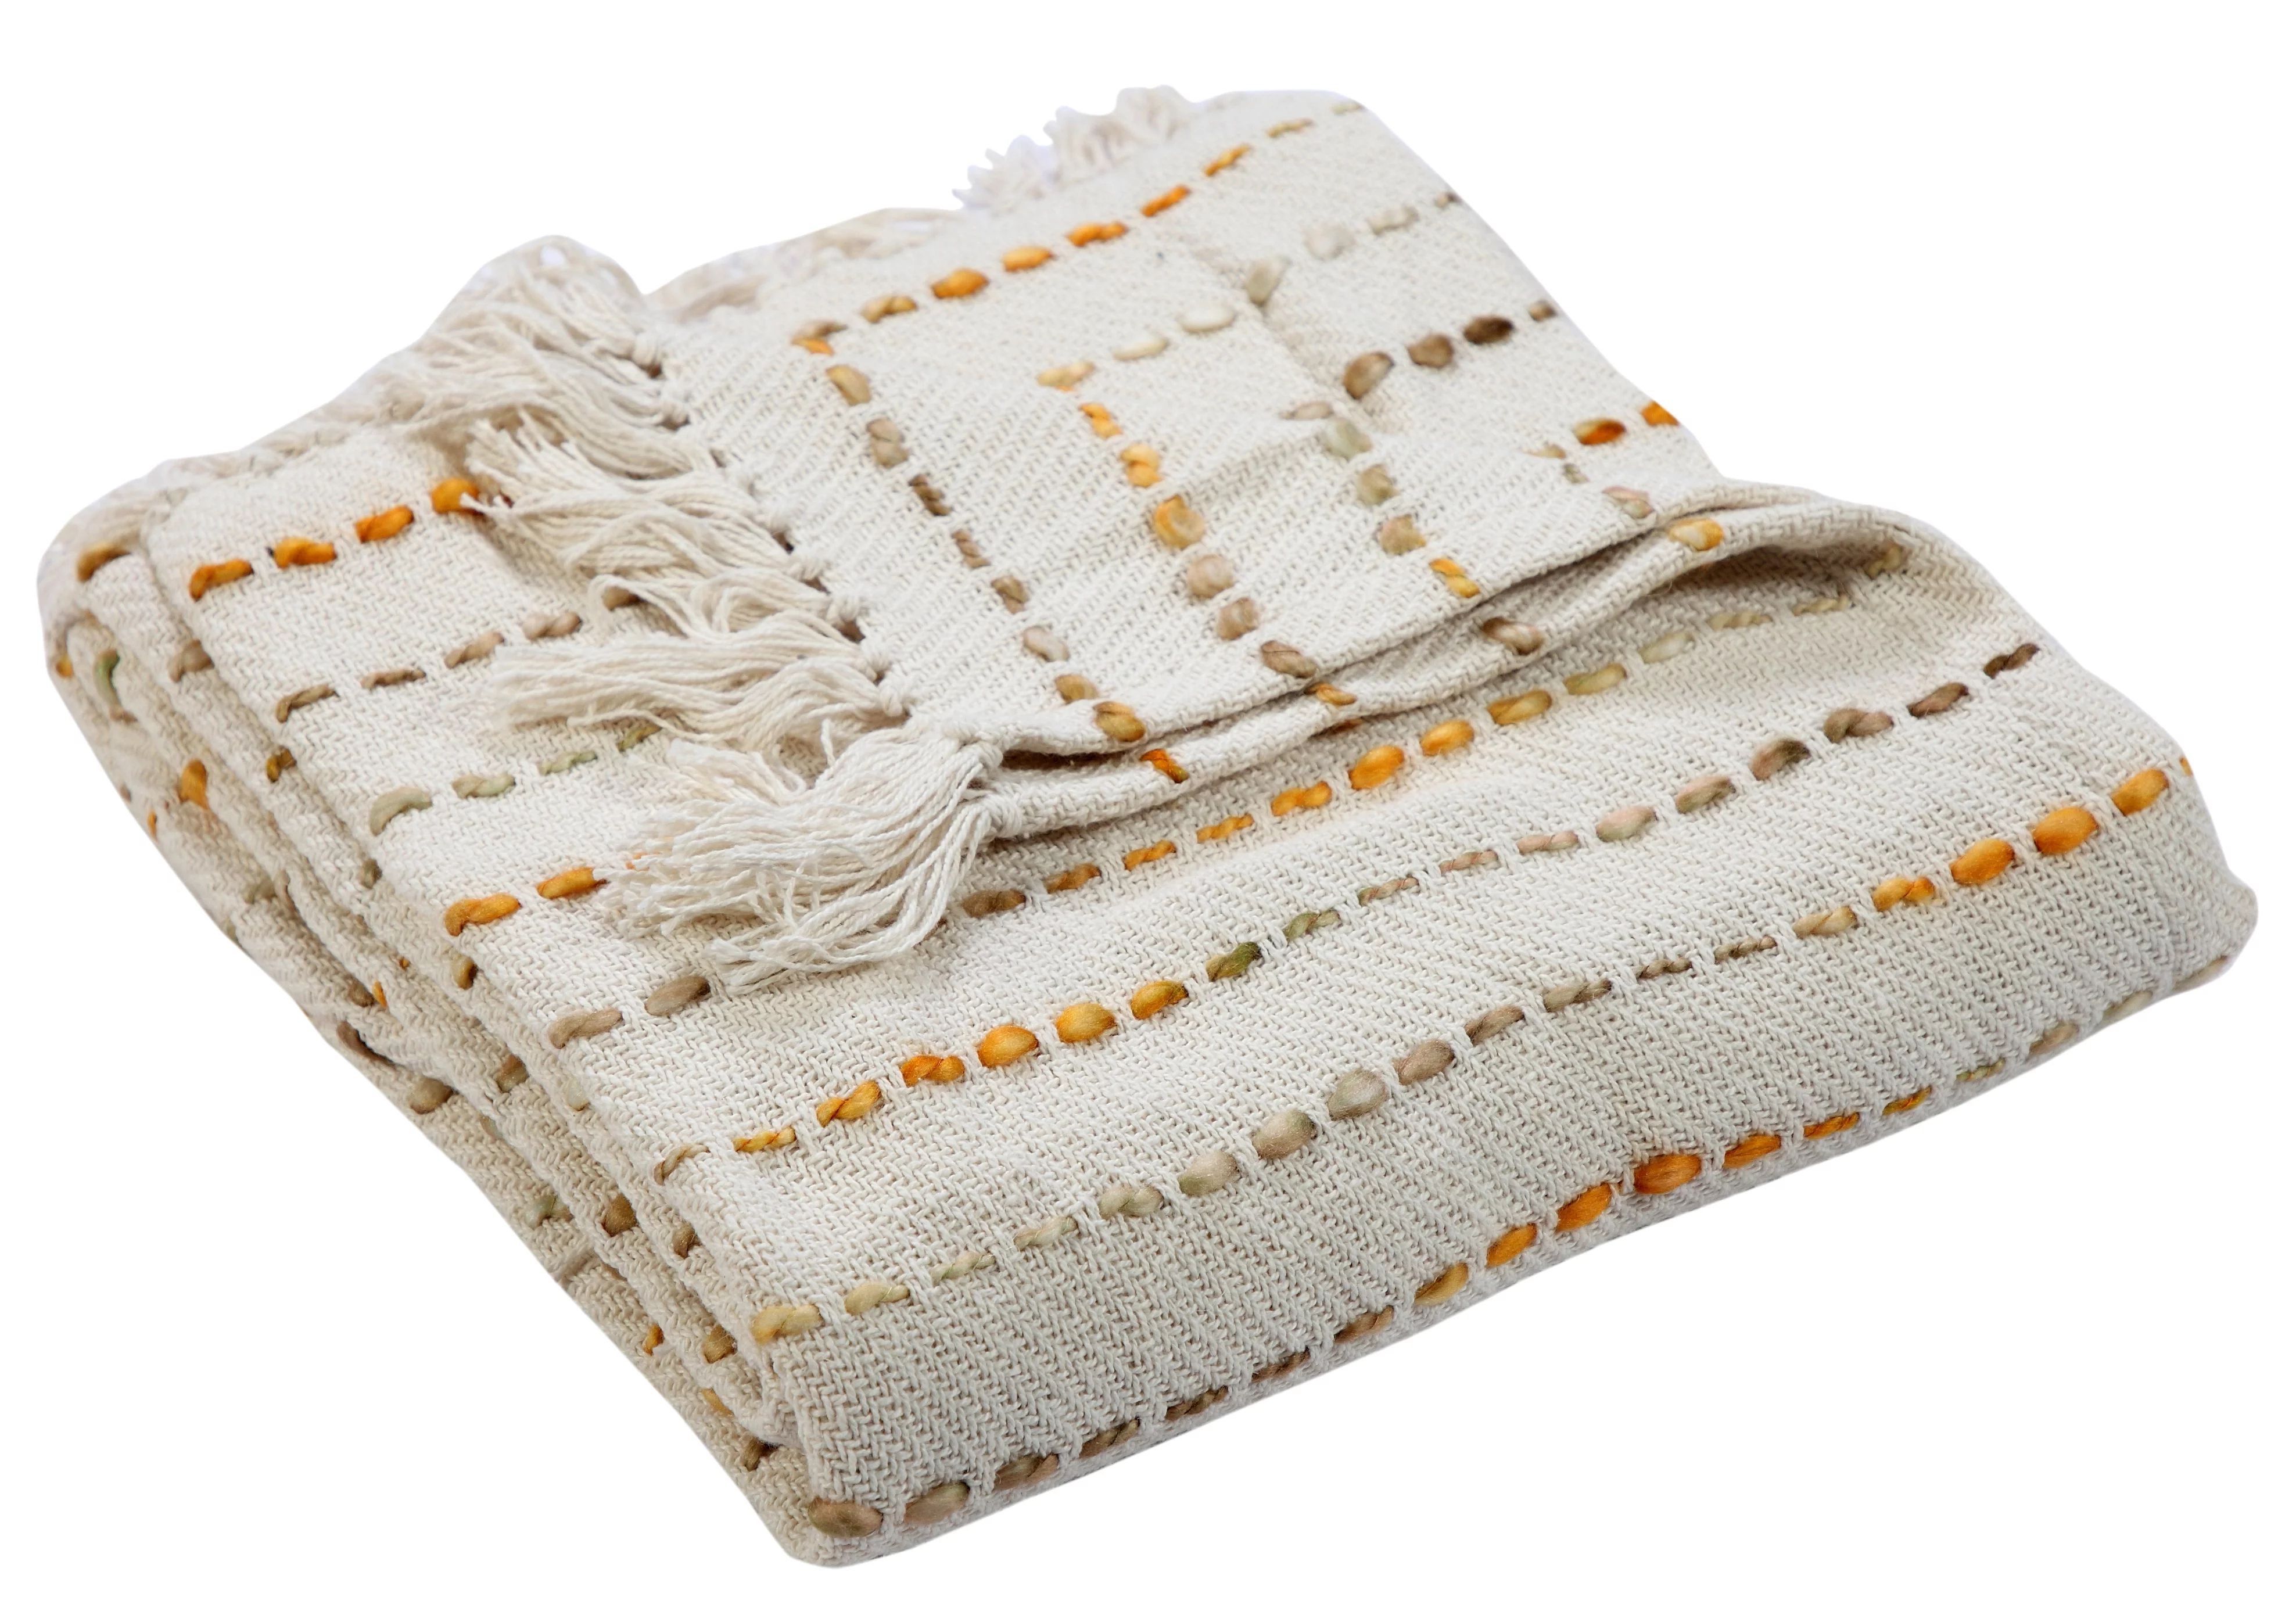 LR Home Soft Luxury Handmade Boho Striped Throw Blanket with Fringe | Walmart (US)